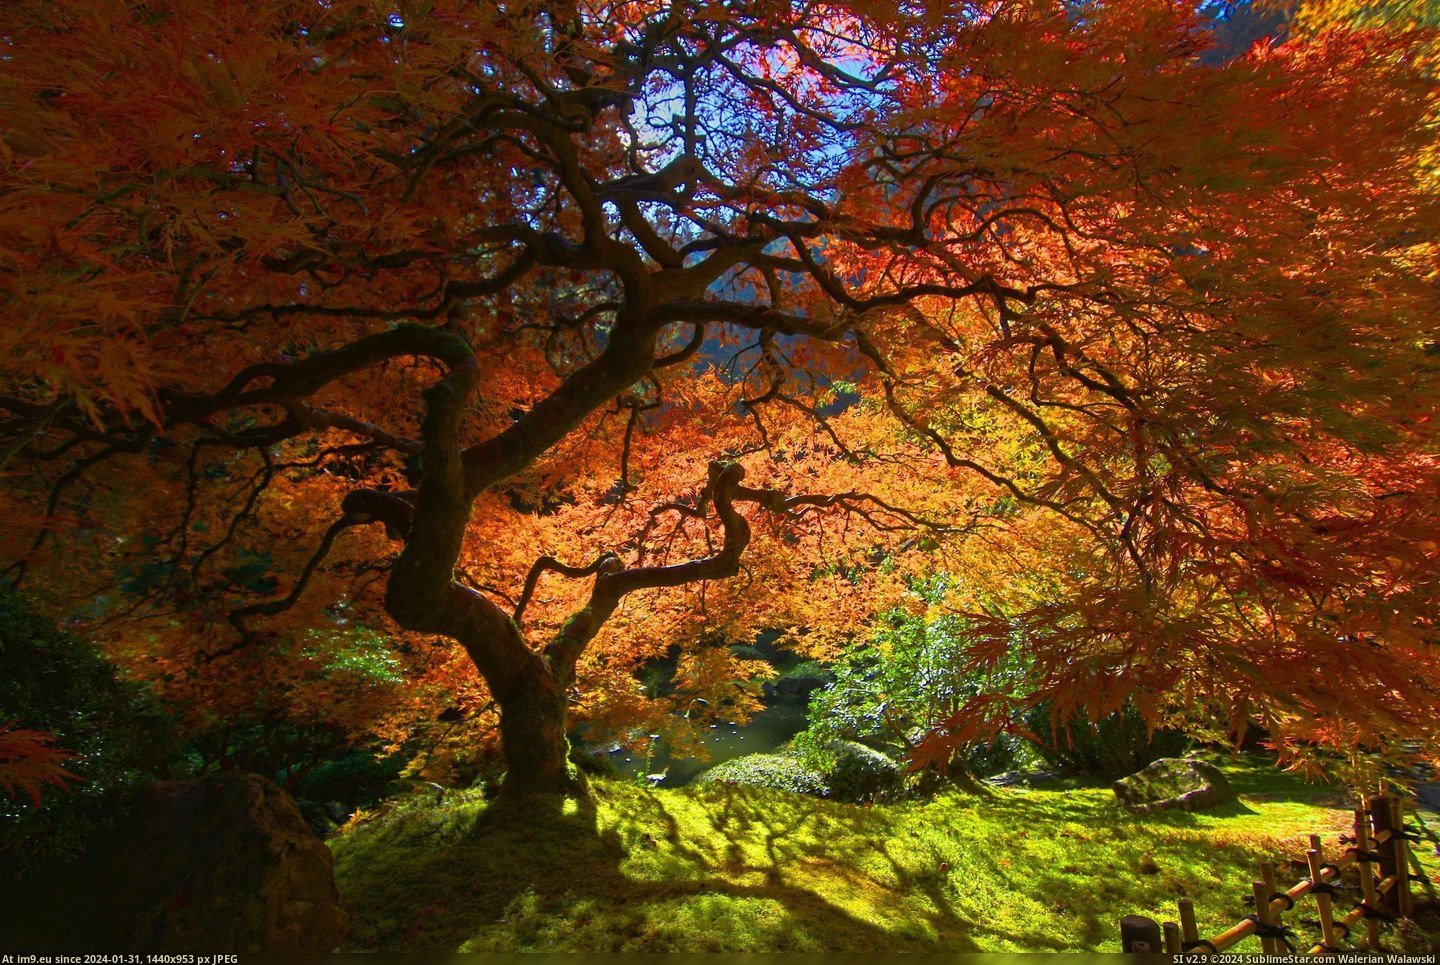 #Japanese #Maple #Portland [Pics] Japanese Maple in Portland Pic. (Bild von album My r/PICS favs))